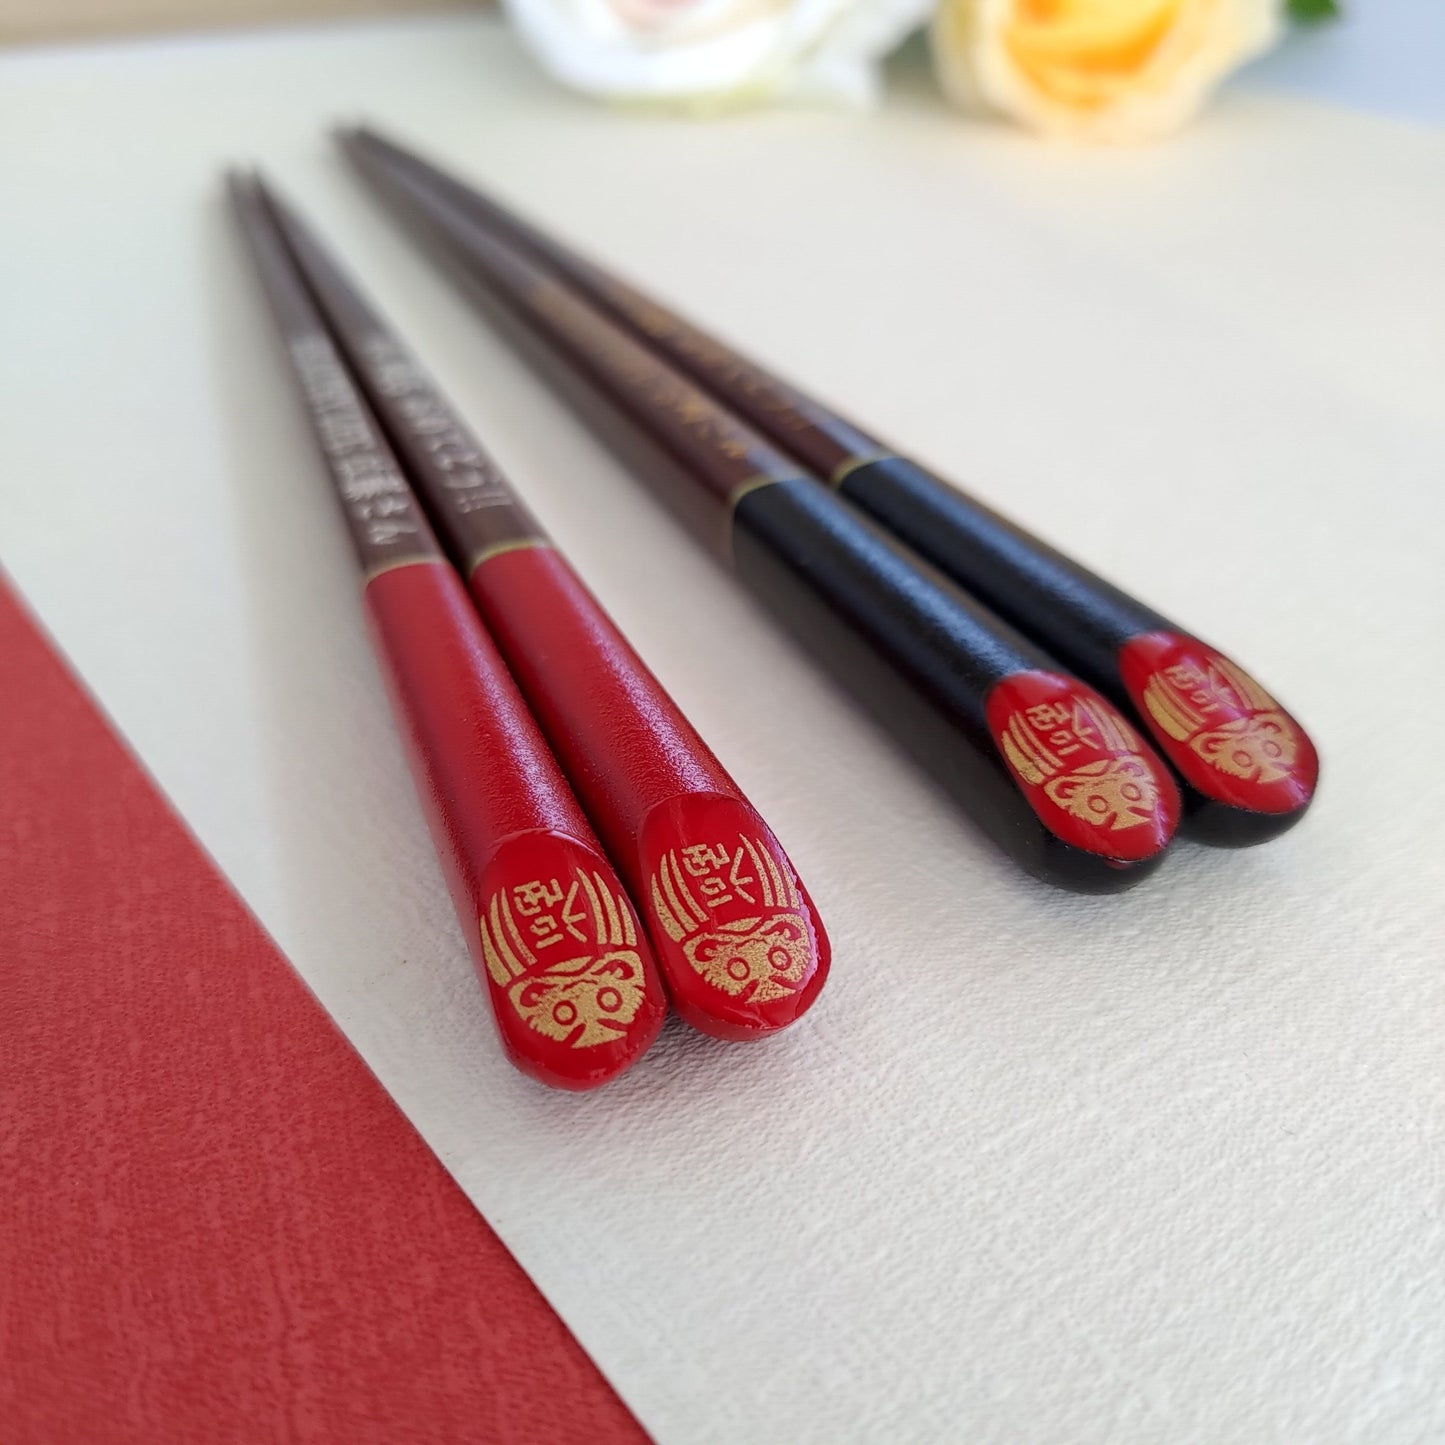 Fukudaruma japanese chopsticks black red  - SINGLE PAIR